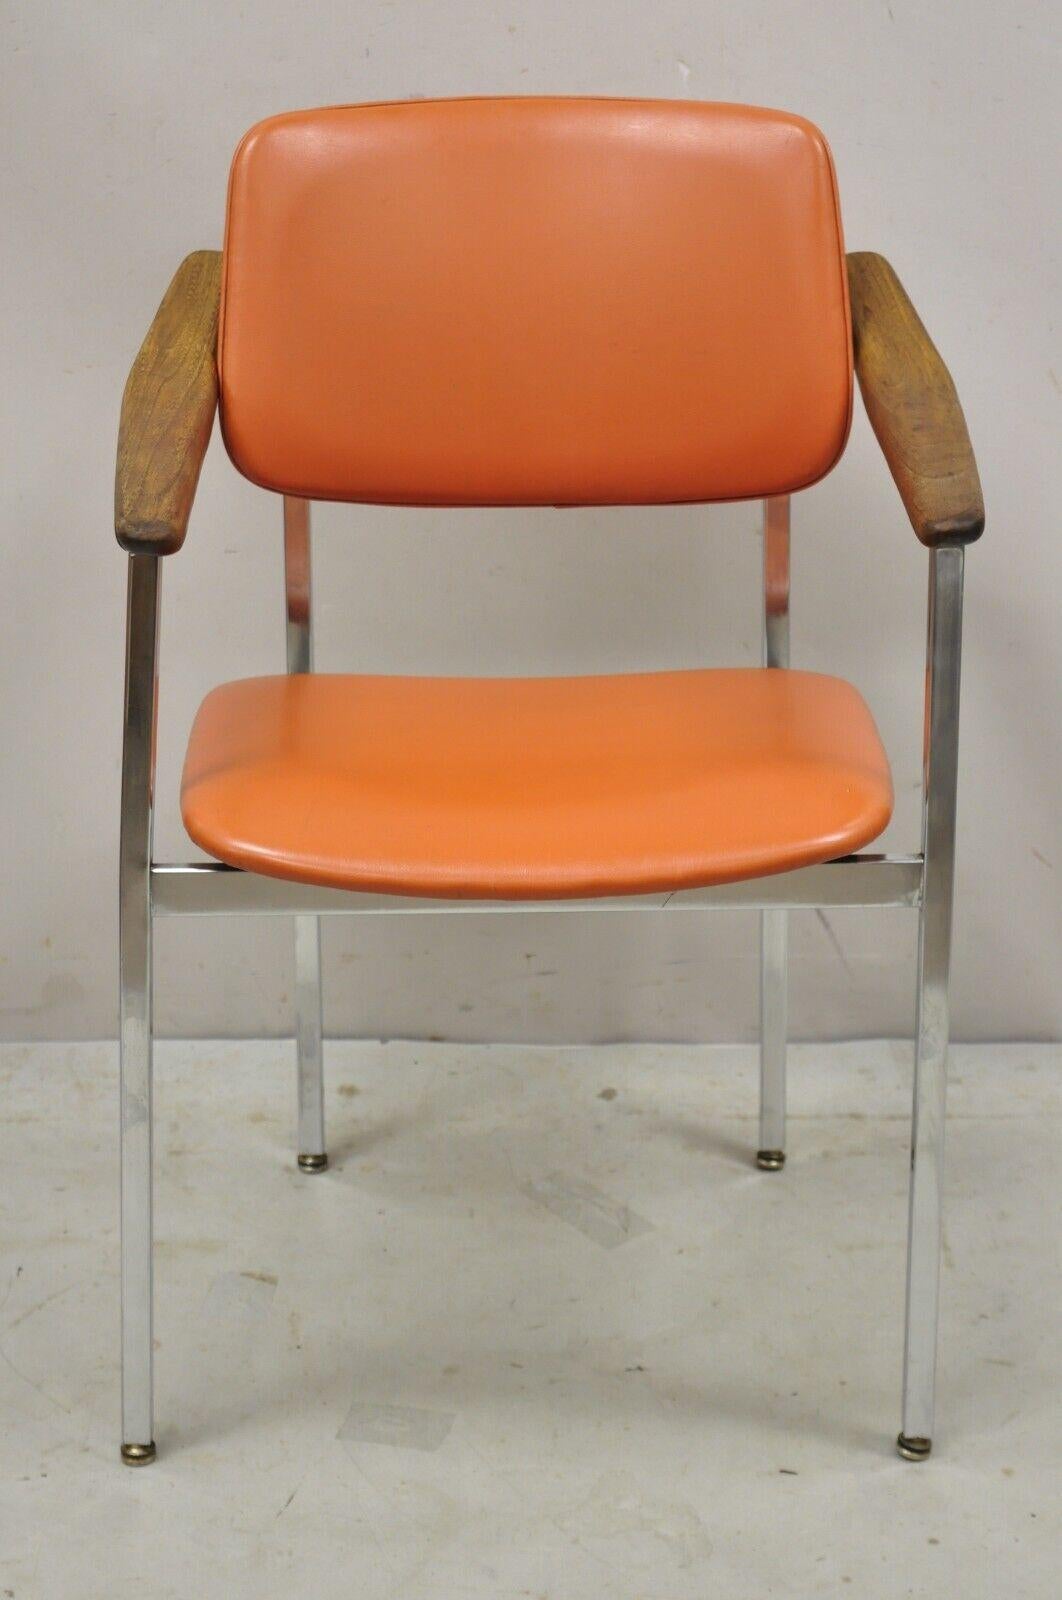 Vintage Mid-Century Modern orange chrome frame sloped wooden arm chair. Item features orange vinyl upholstery, chrome metal frame, sloped wooden arms, very nice vintage item, sleek sculptural form. circa mid to late 20th century. Measurements: 32.5